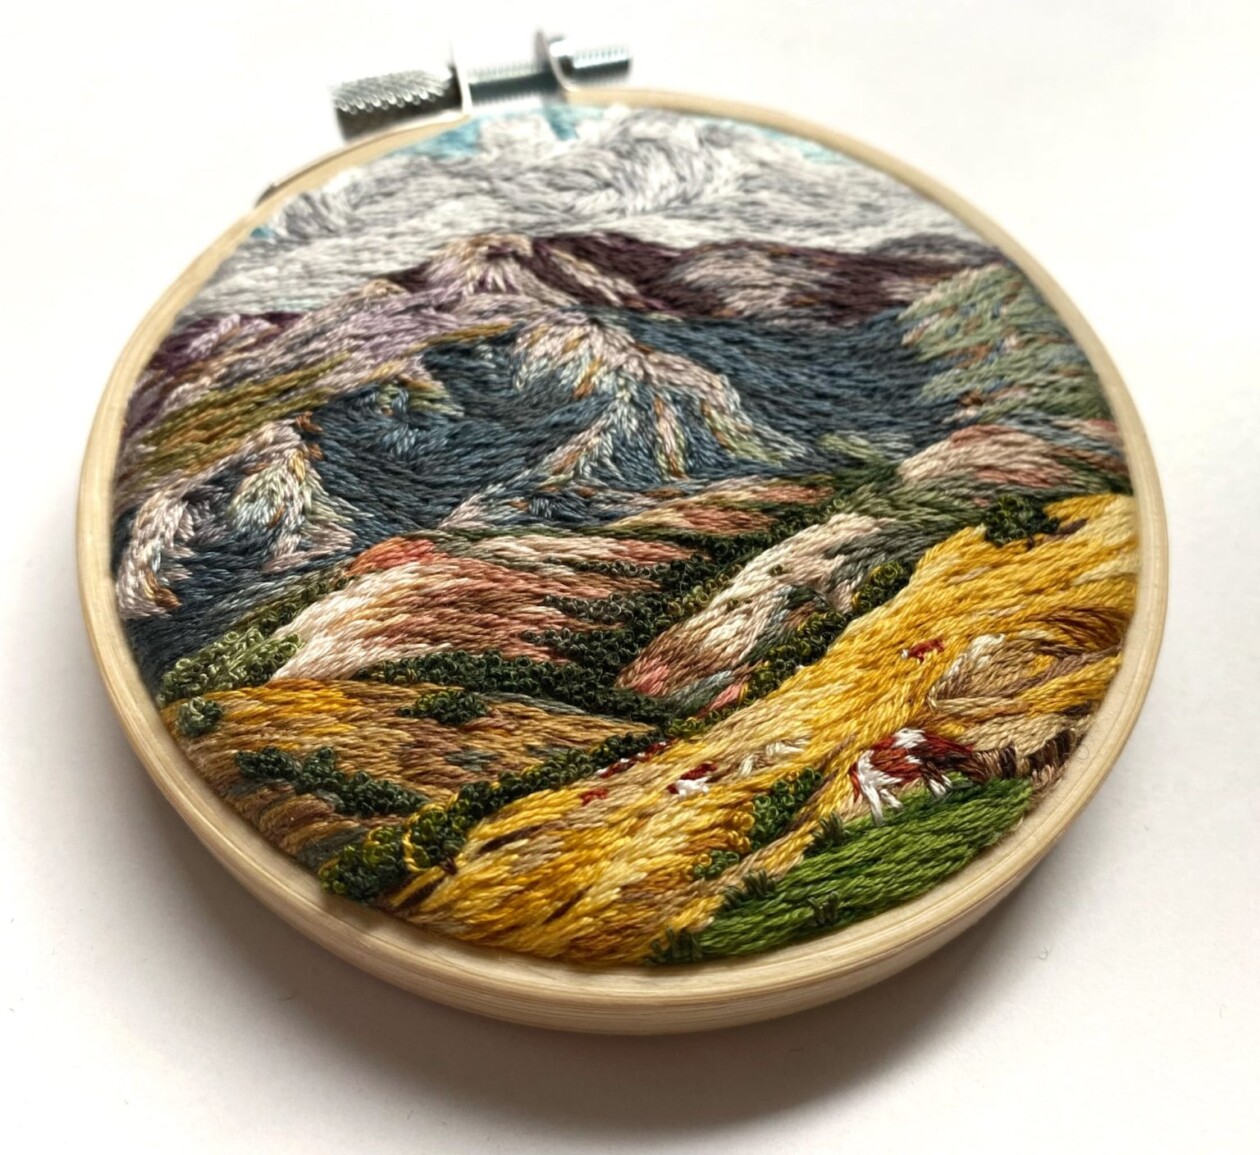 Wonderful Impressionistic Landscape Embroideries By Cassandra Dias (12)